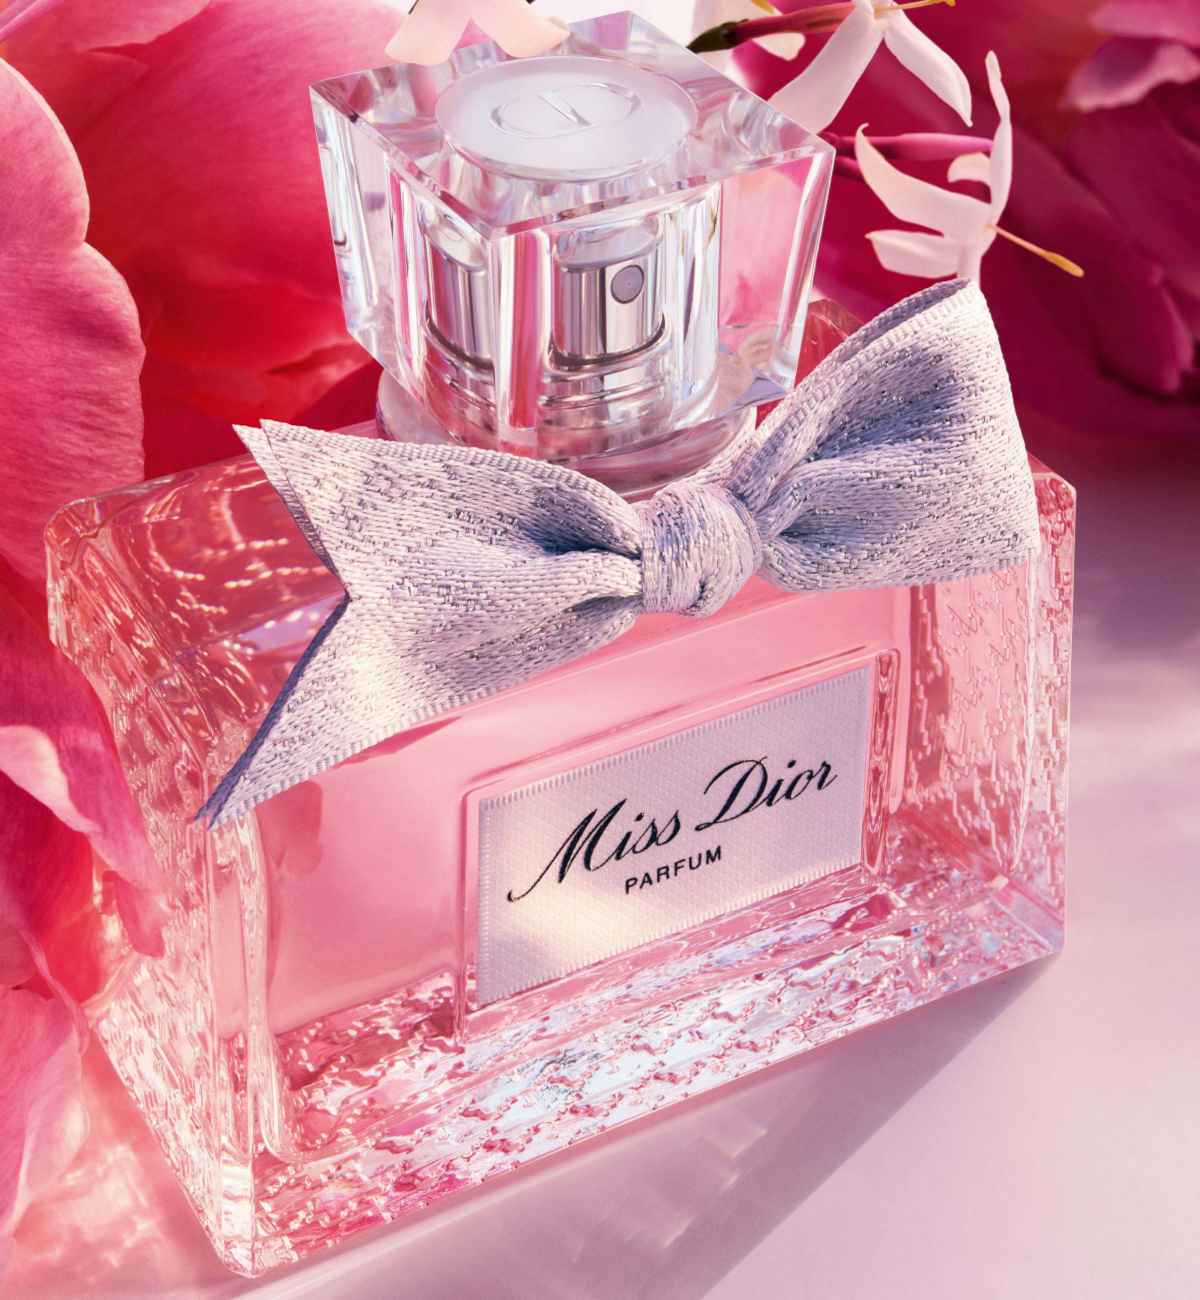 Dior profumo donna Miss Dior Parfum